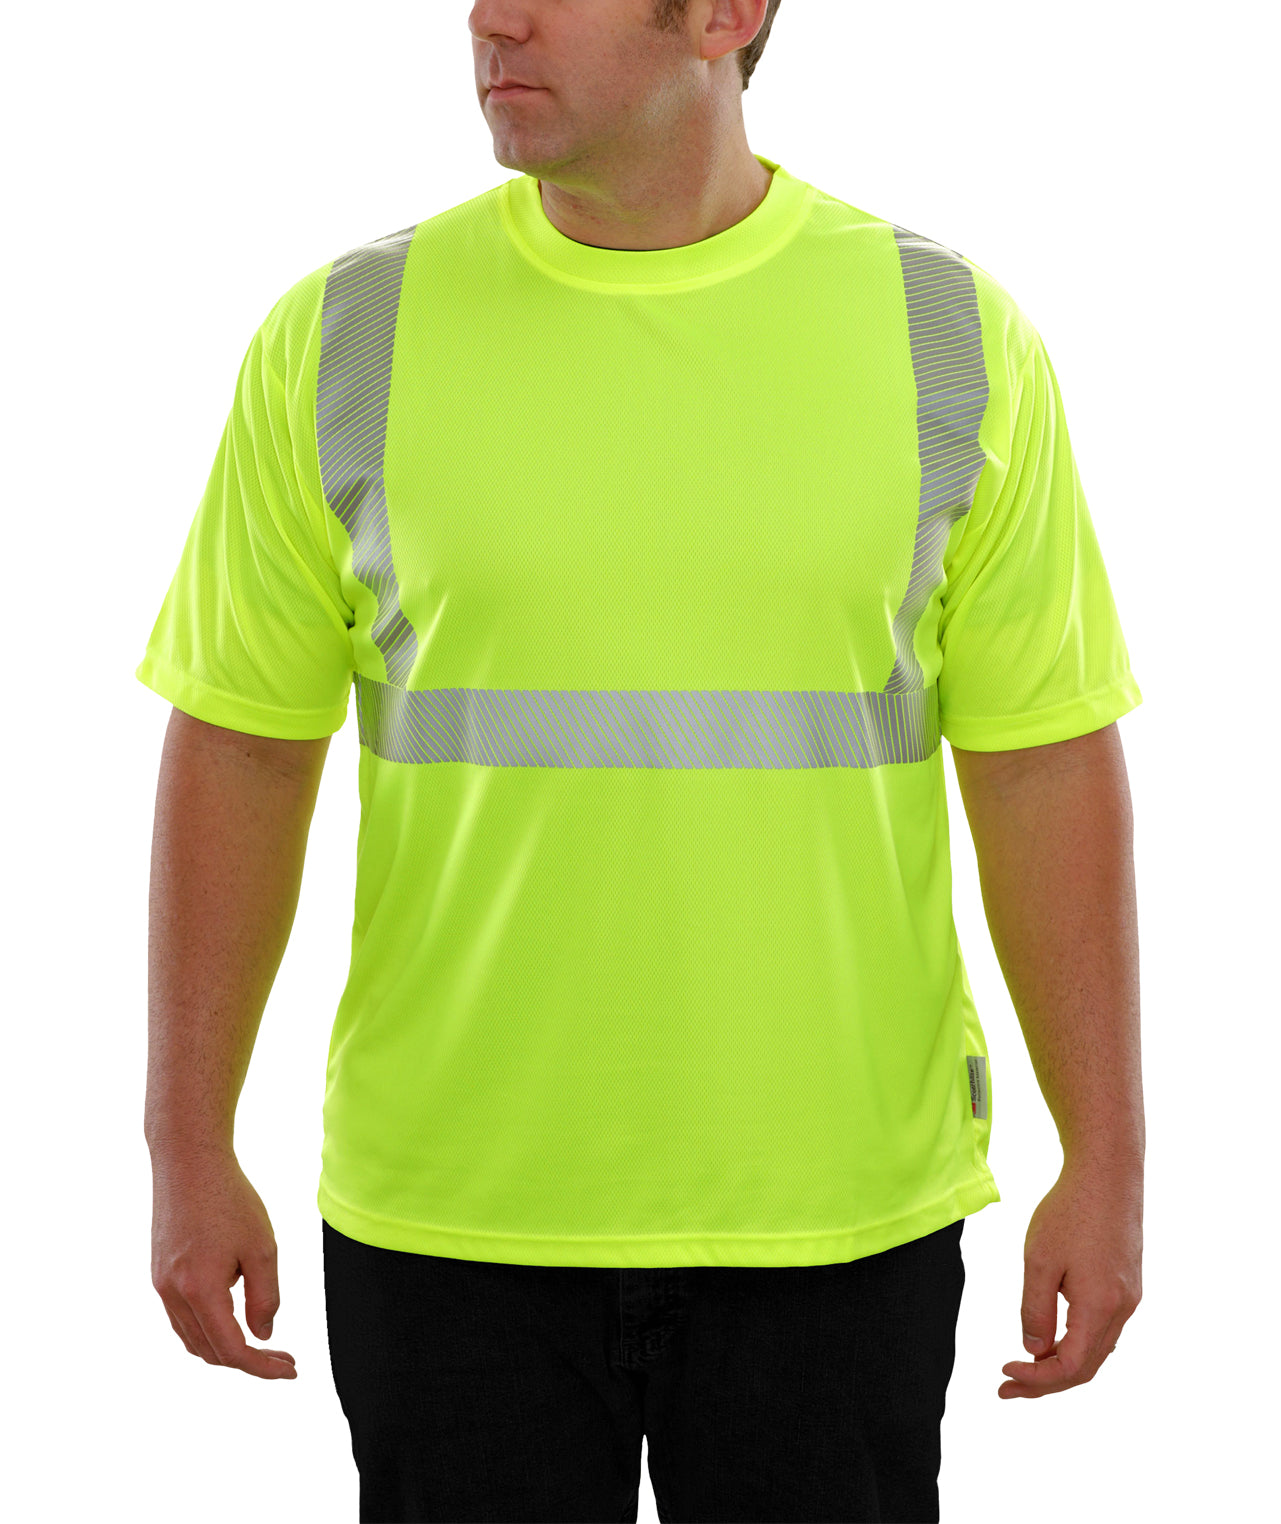 112CTLM Hi-Vis Lime Birdseye No Pocket HACCP Safety T-Shirt with 3MTM Comfort Trim